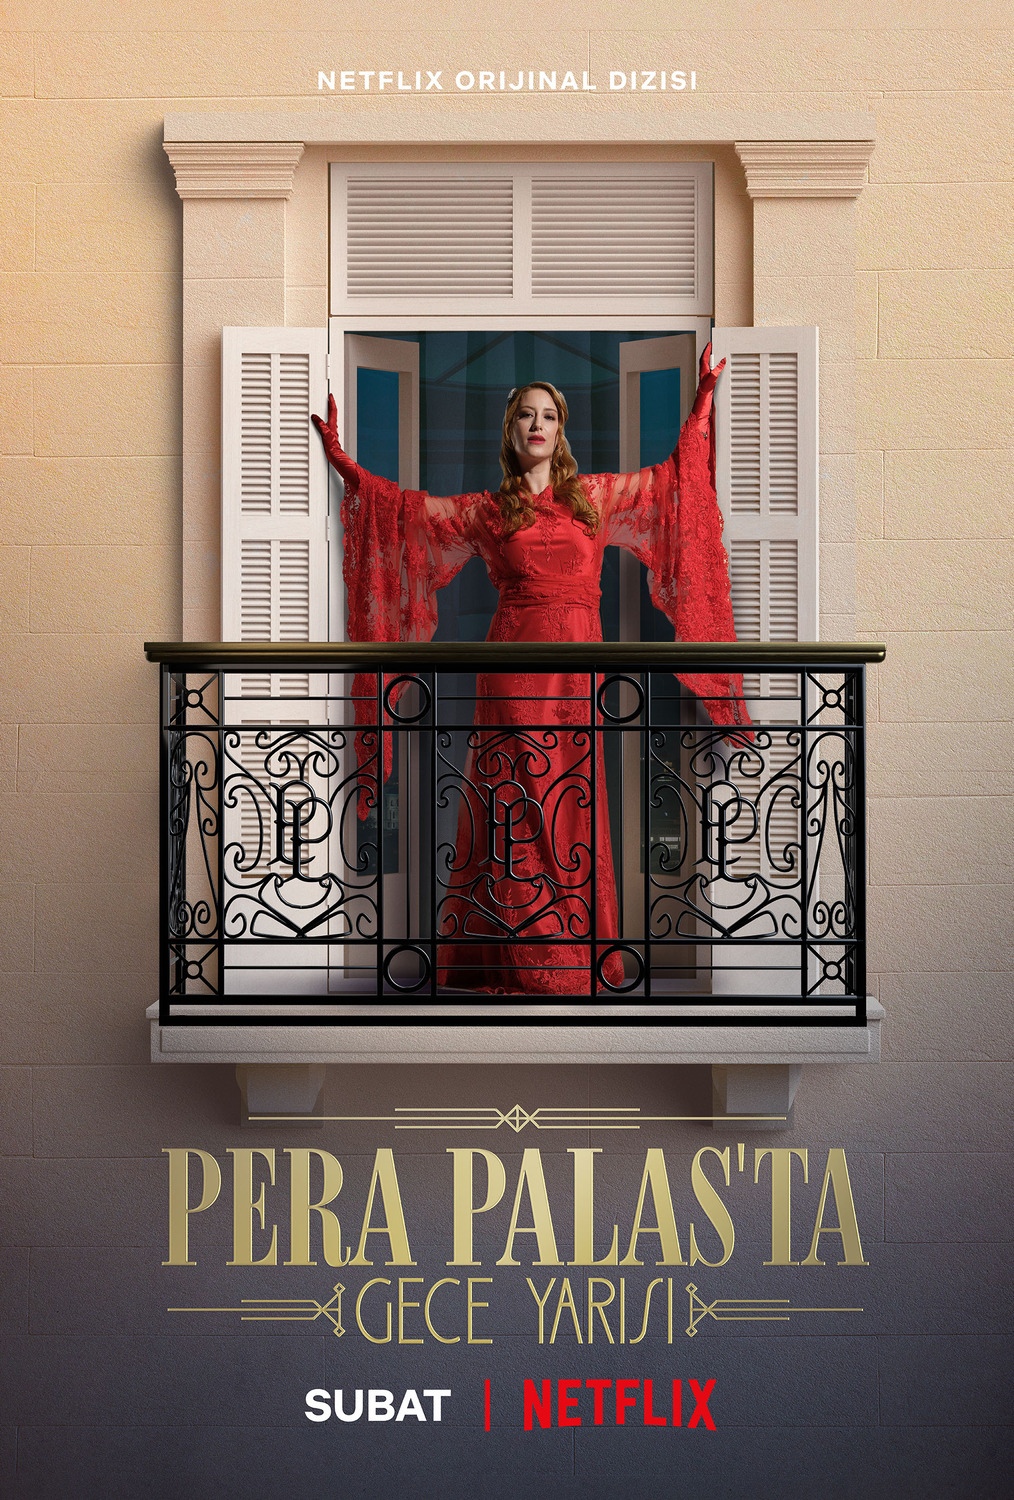 Extra Large TV Poster Image for Pera Palas'ta Gece Yarisi (#8 of 10)